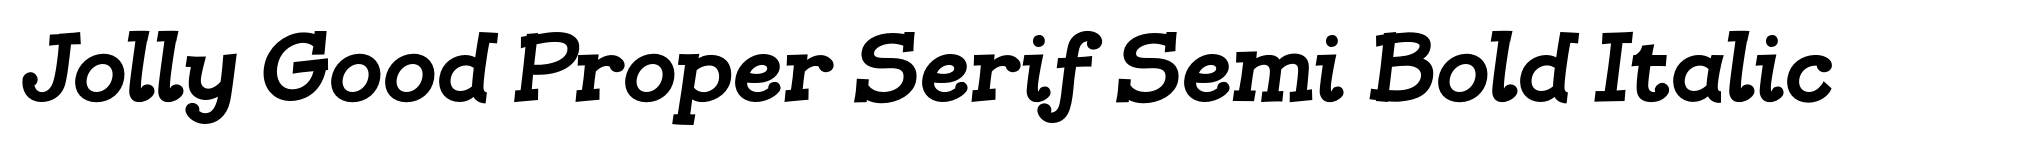 Jolly Good Proper Serif Semi Bold Italic image